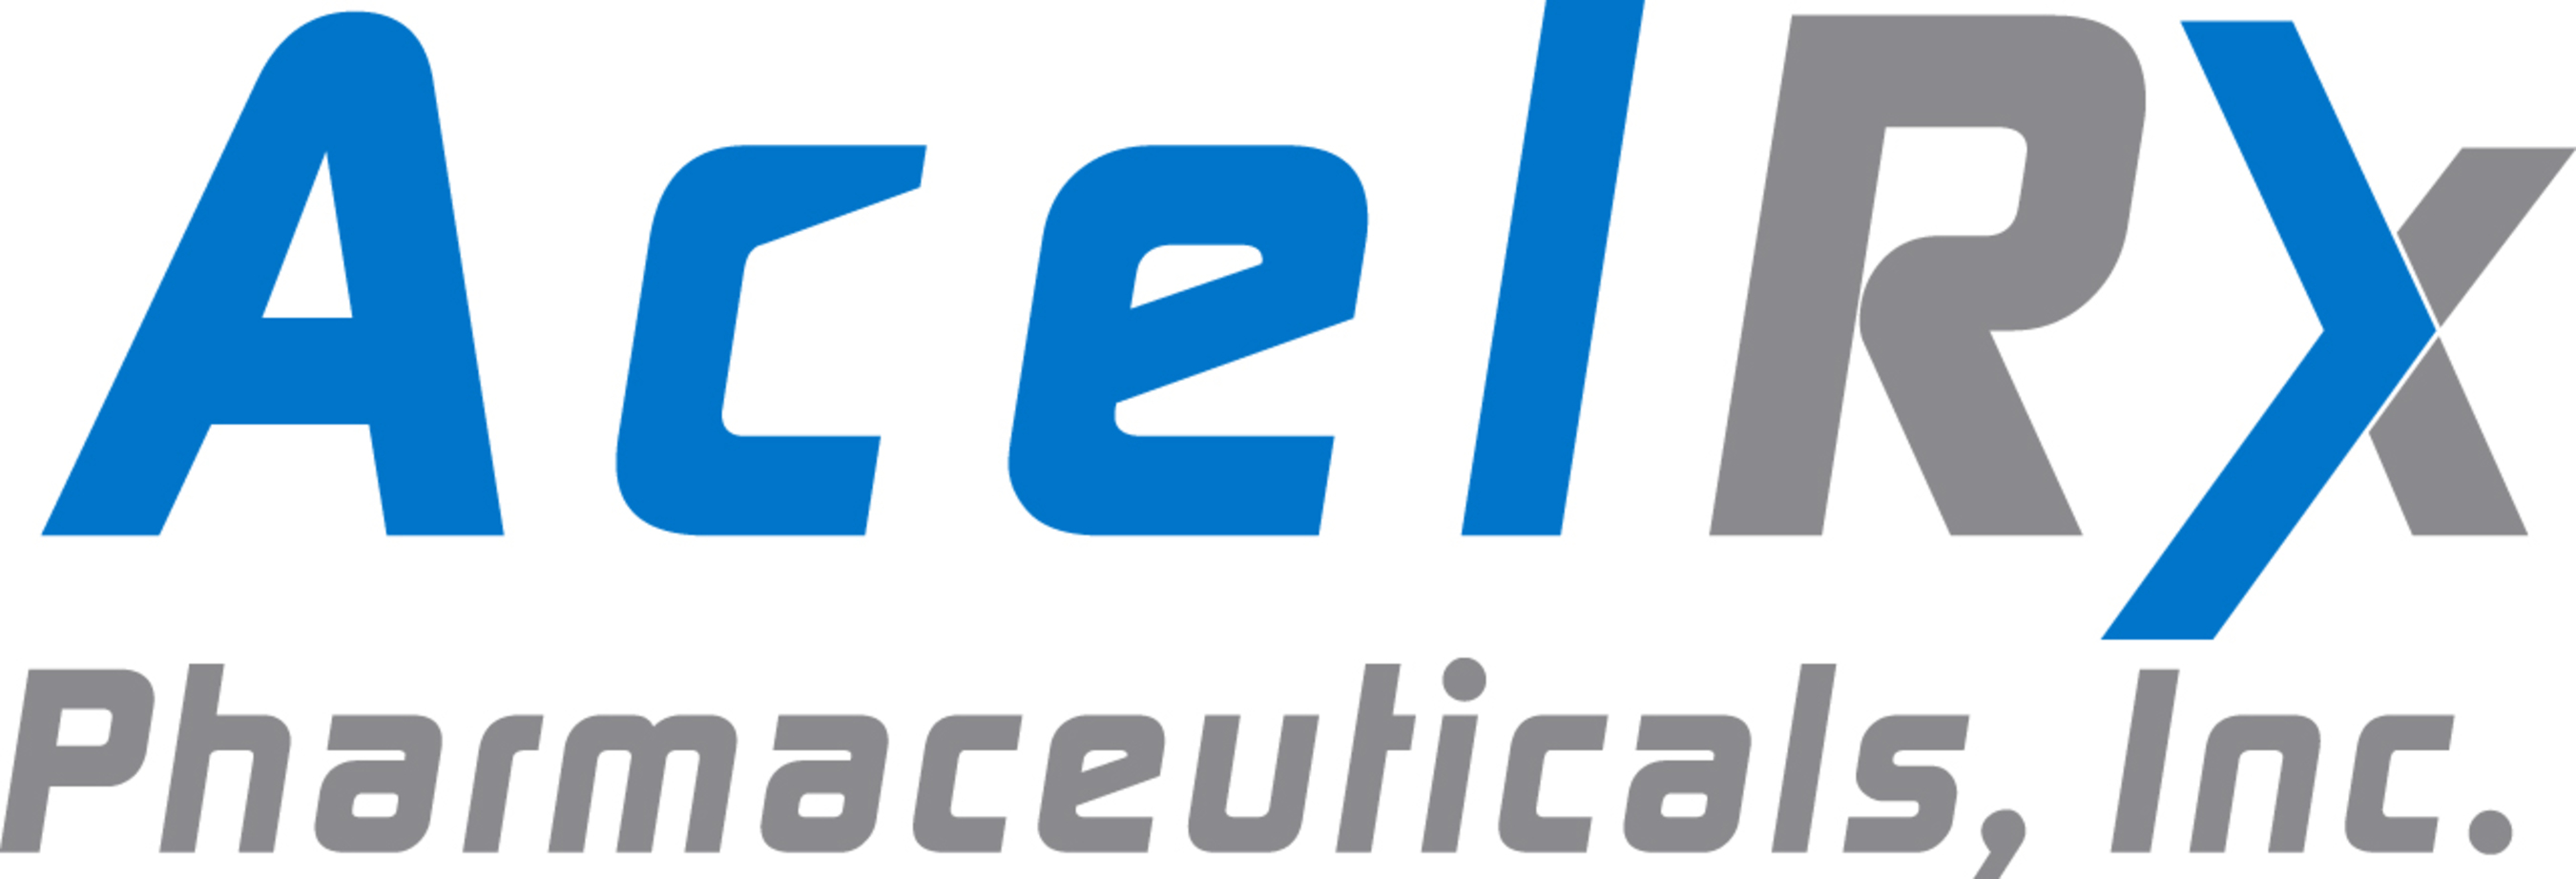 AcelRx logo. (PRNewsFoto/AcelRx Pharmaceuticals, Inc.) (PRNewsFoto/AcelRx Pharmaceuticals, Inc.)